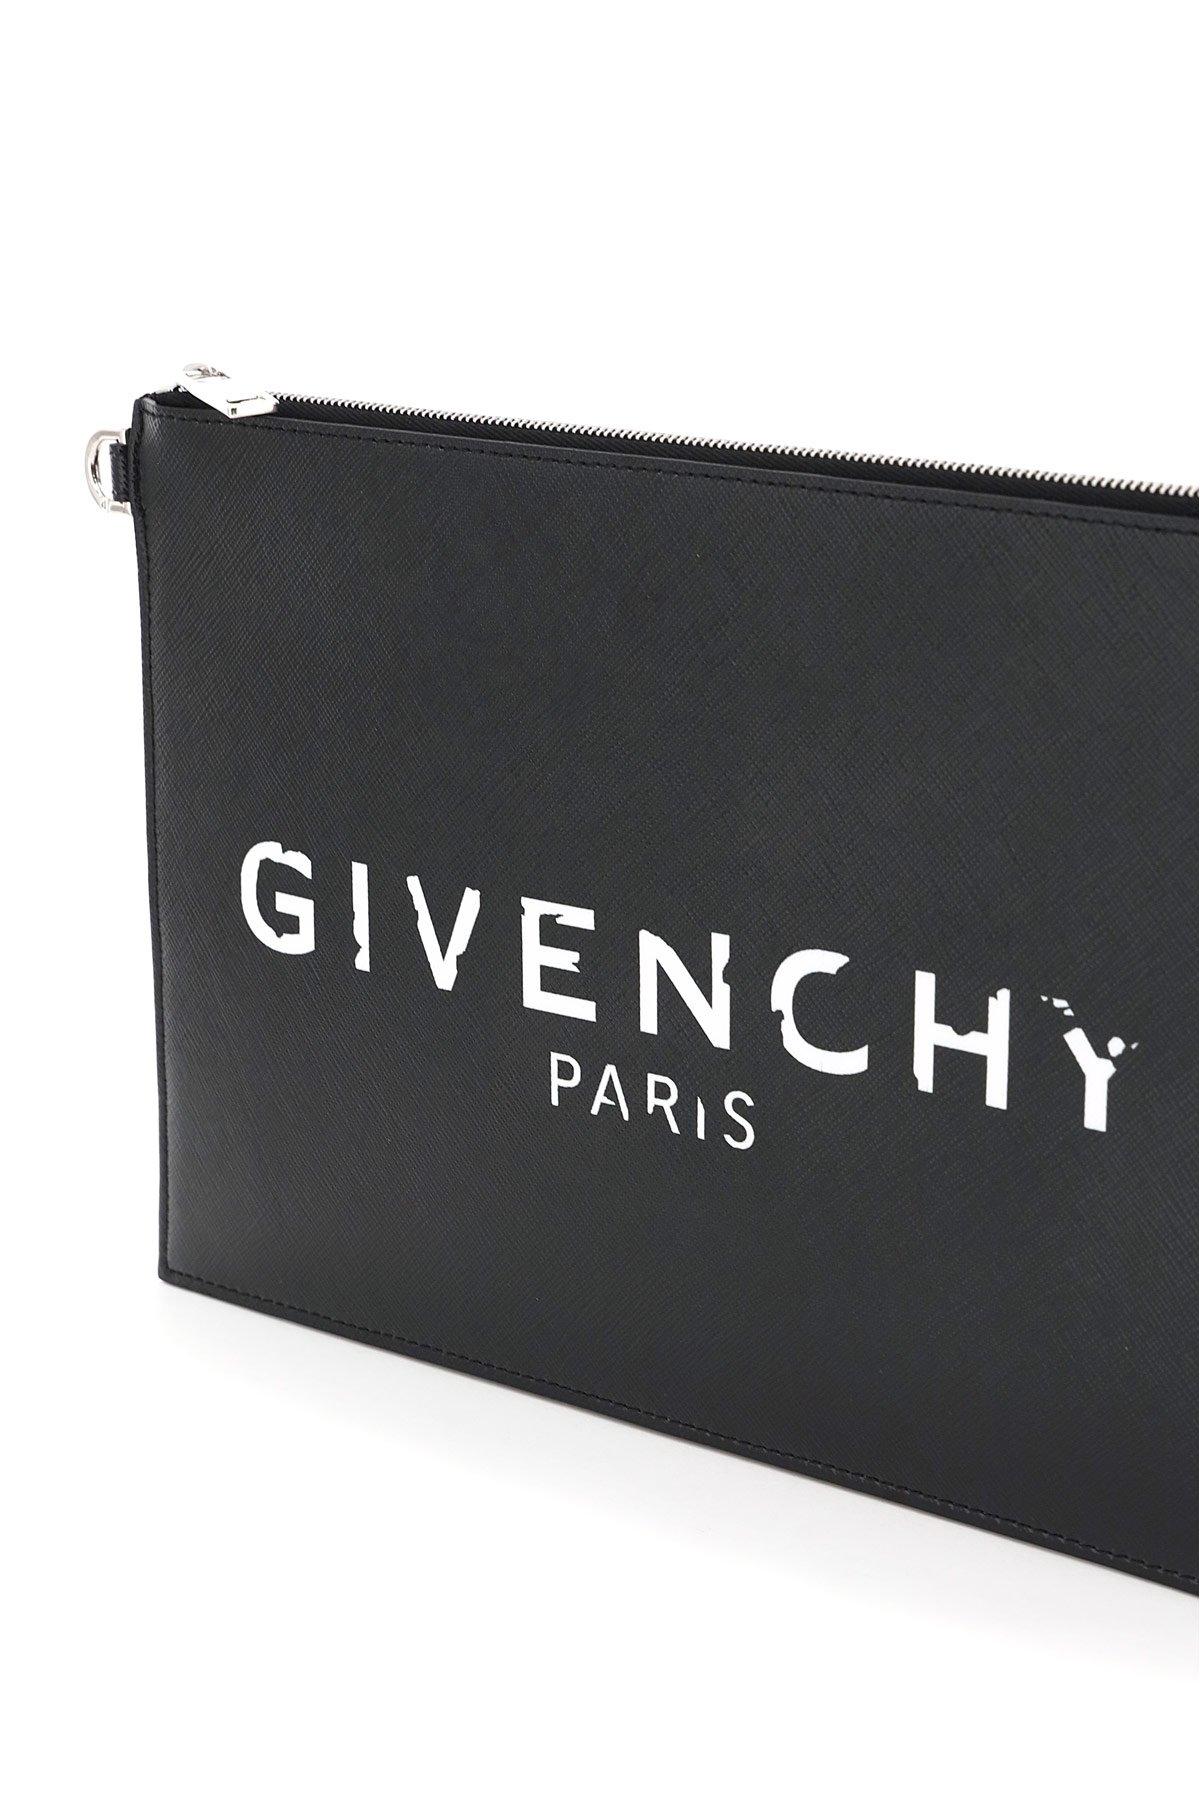 Givenchy Cotton Paris Medium Pouch in Black - Lyst